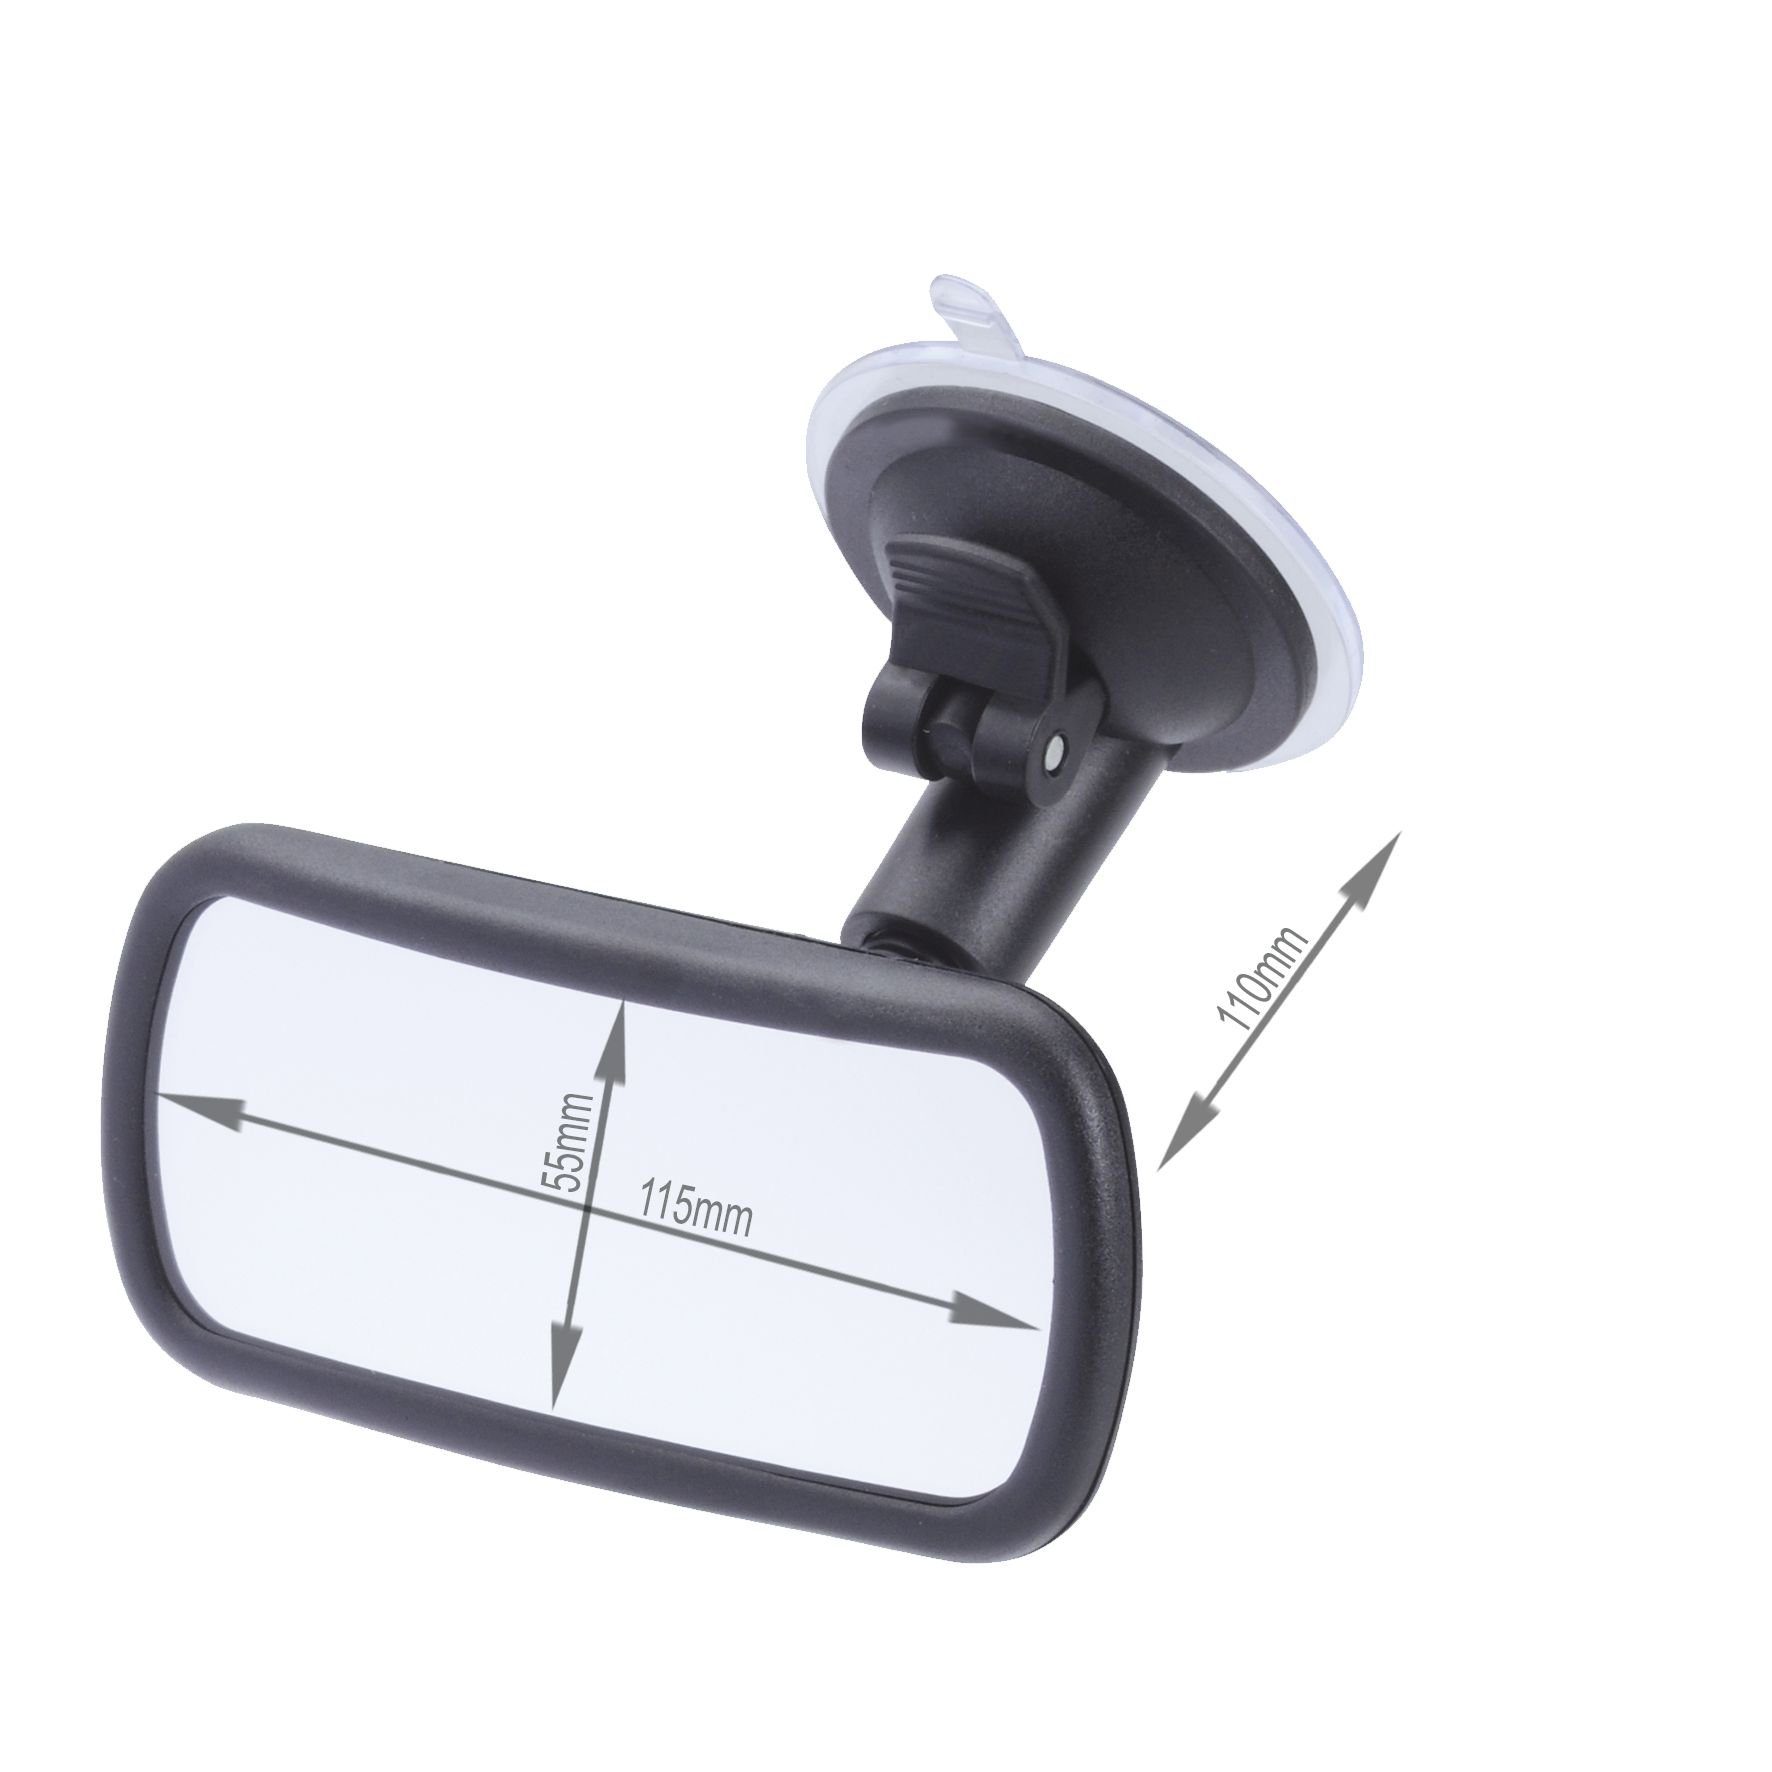 CarStyling Spiegelaufsatz Fahrschulspiegel Toter Winkel Aufsatz  Weitwinkelspiegel Aufsatzspiegel